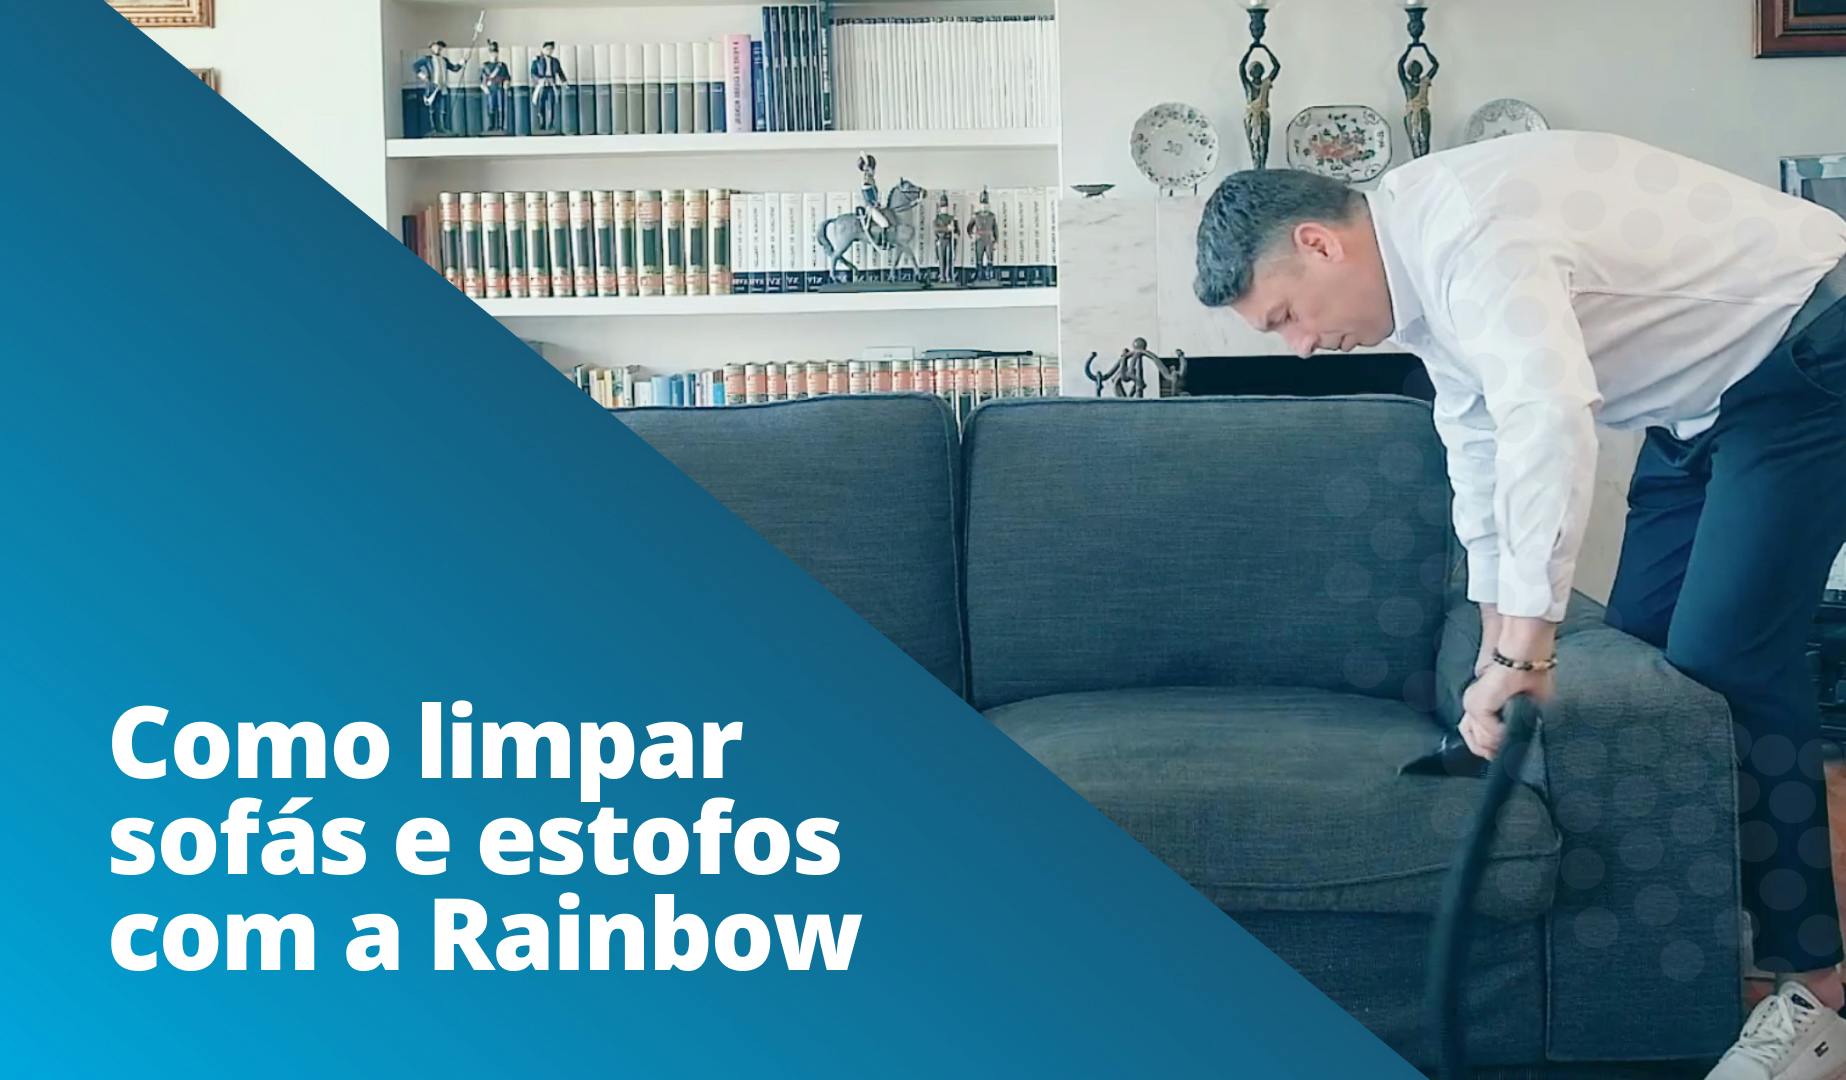 06-rainbow-sofas.jpg